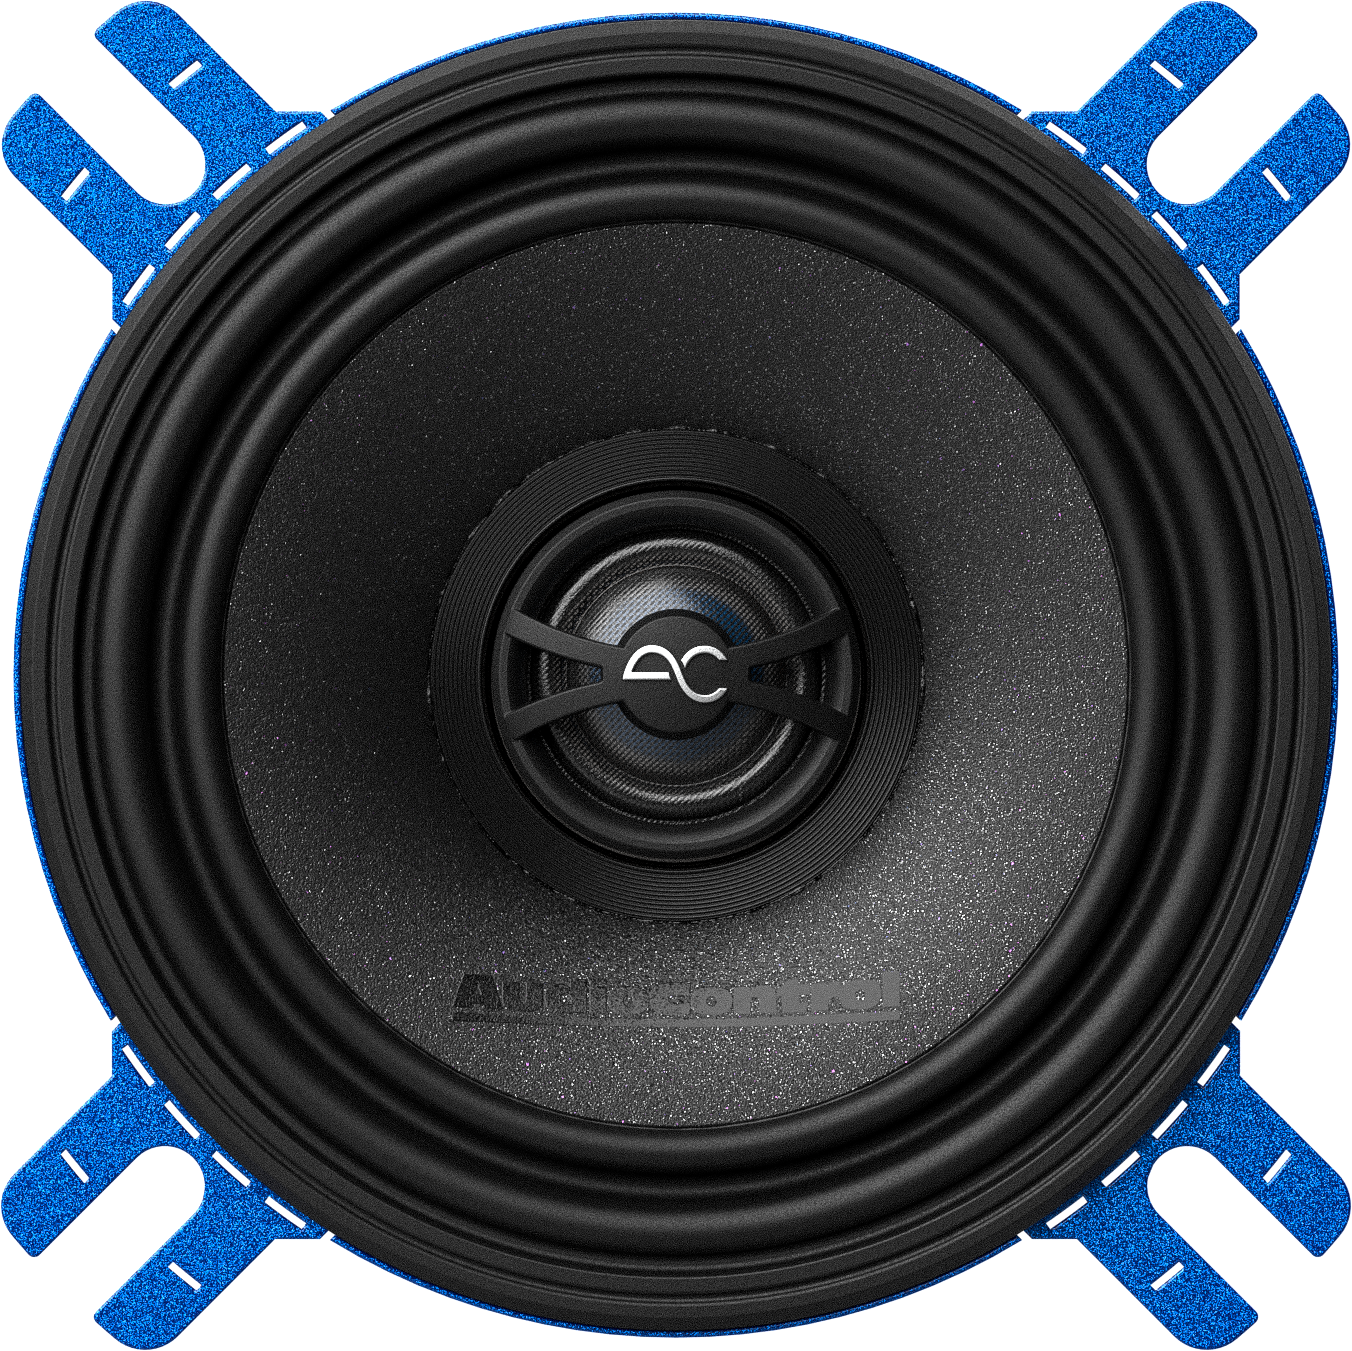 AudioControl PNW Series 3.5" 25 Watt (RMS) High-Fidelity Coaxial Speakers